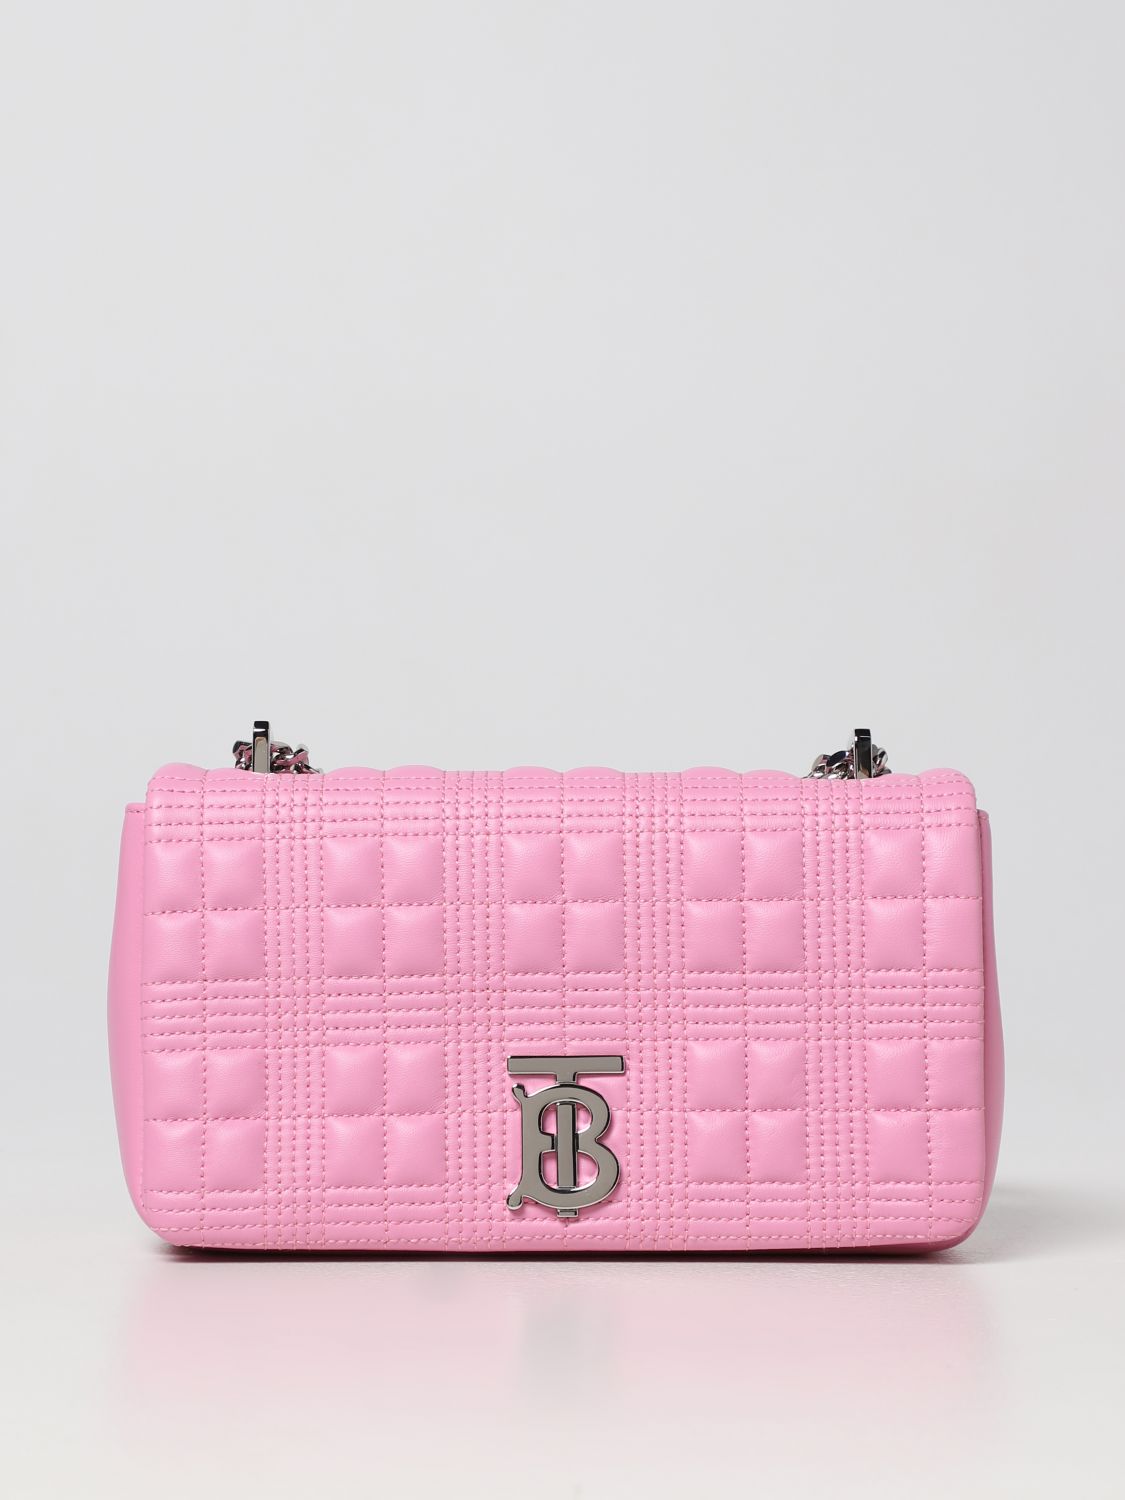 burberry pink bag